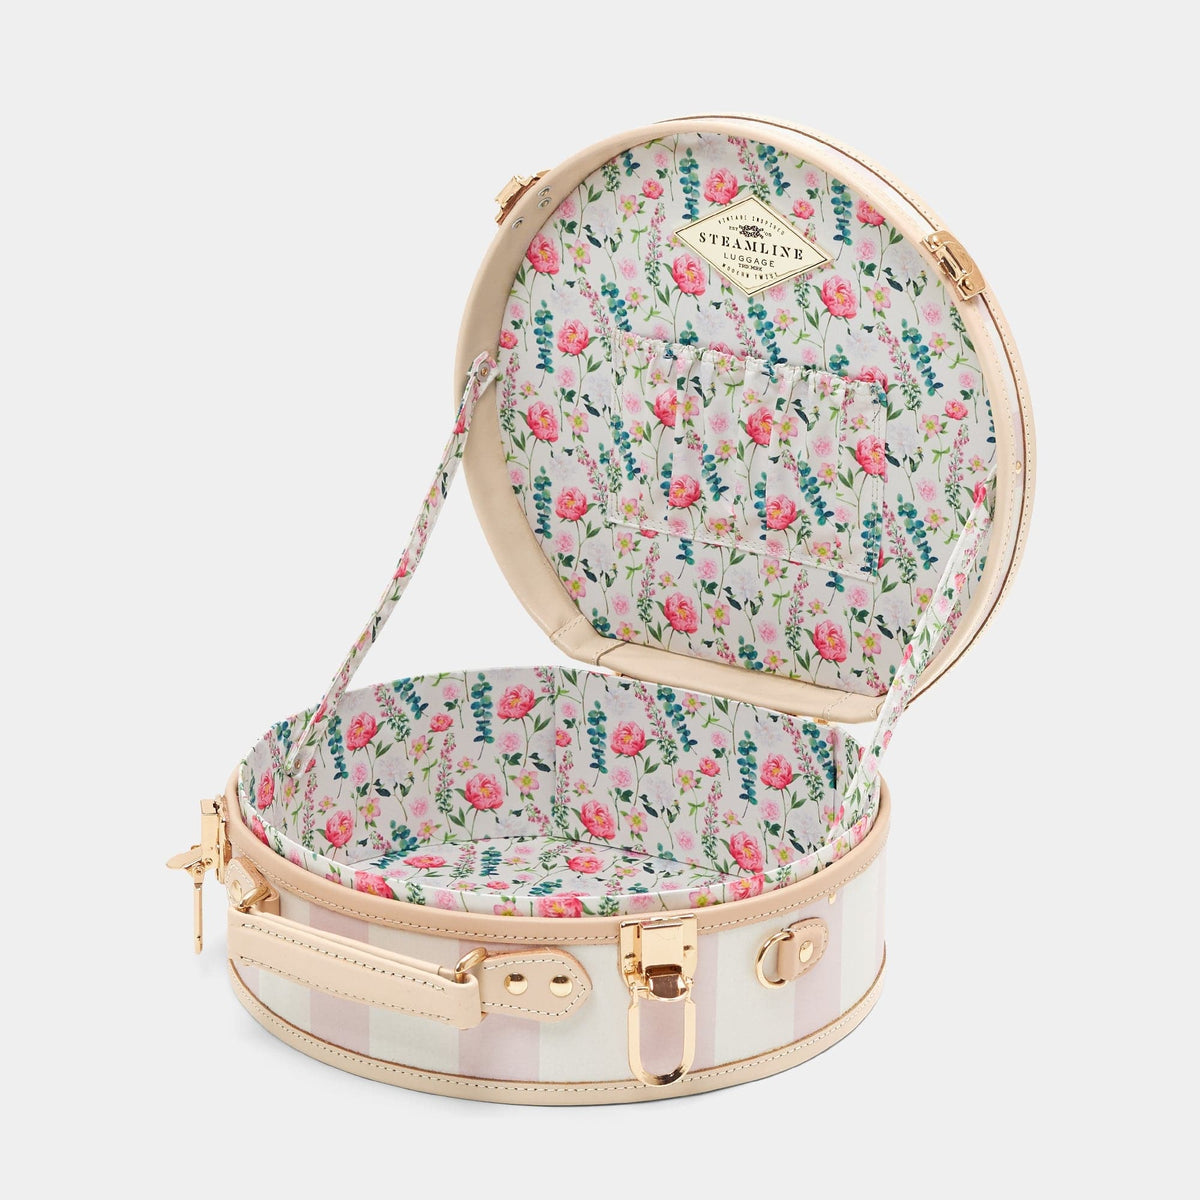 The Illustrator - Pink Hatbox Small Hatbox Small Steamline Luggage 